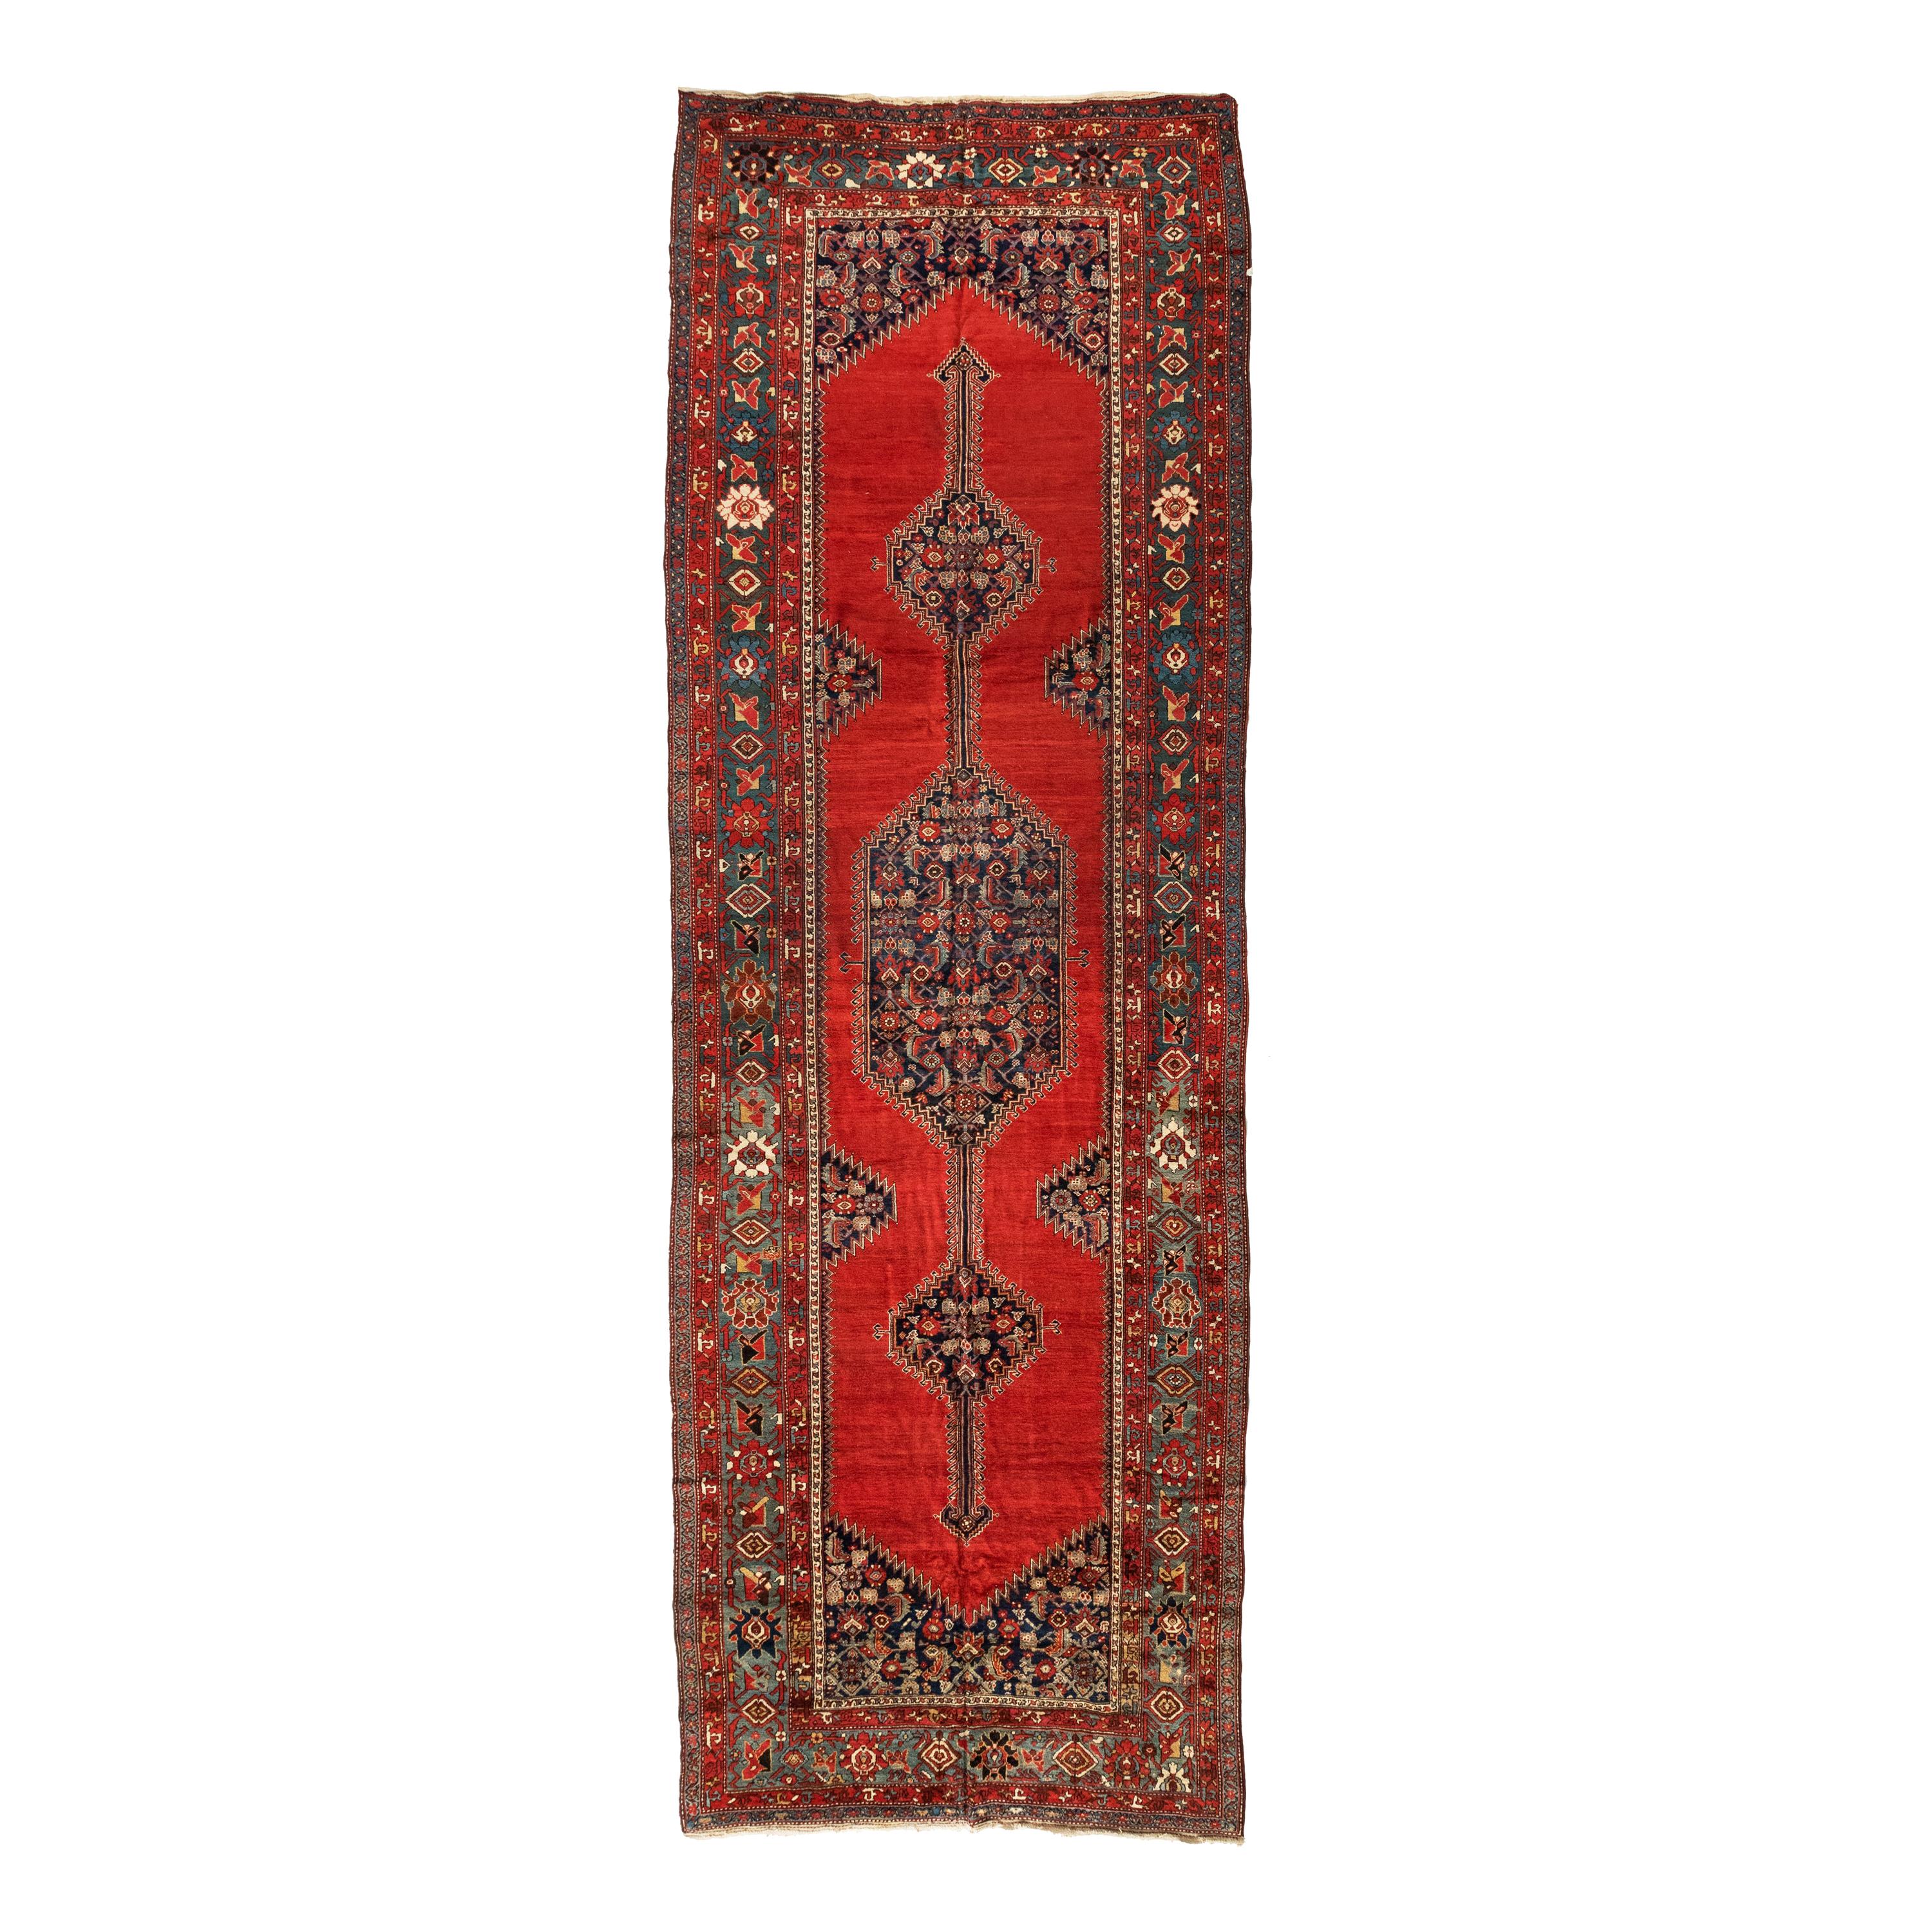 Antique Large Northwest Persia Bijar Geometric Tribal Red Rug, circa 1900s-1920s For Sale